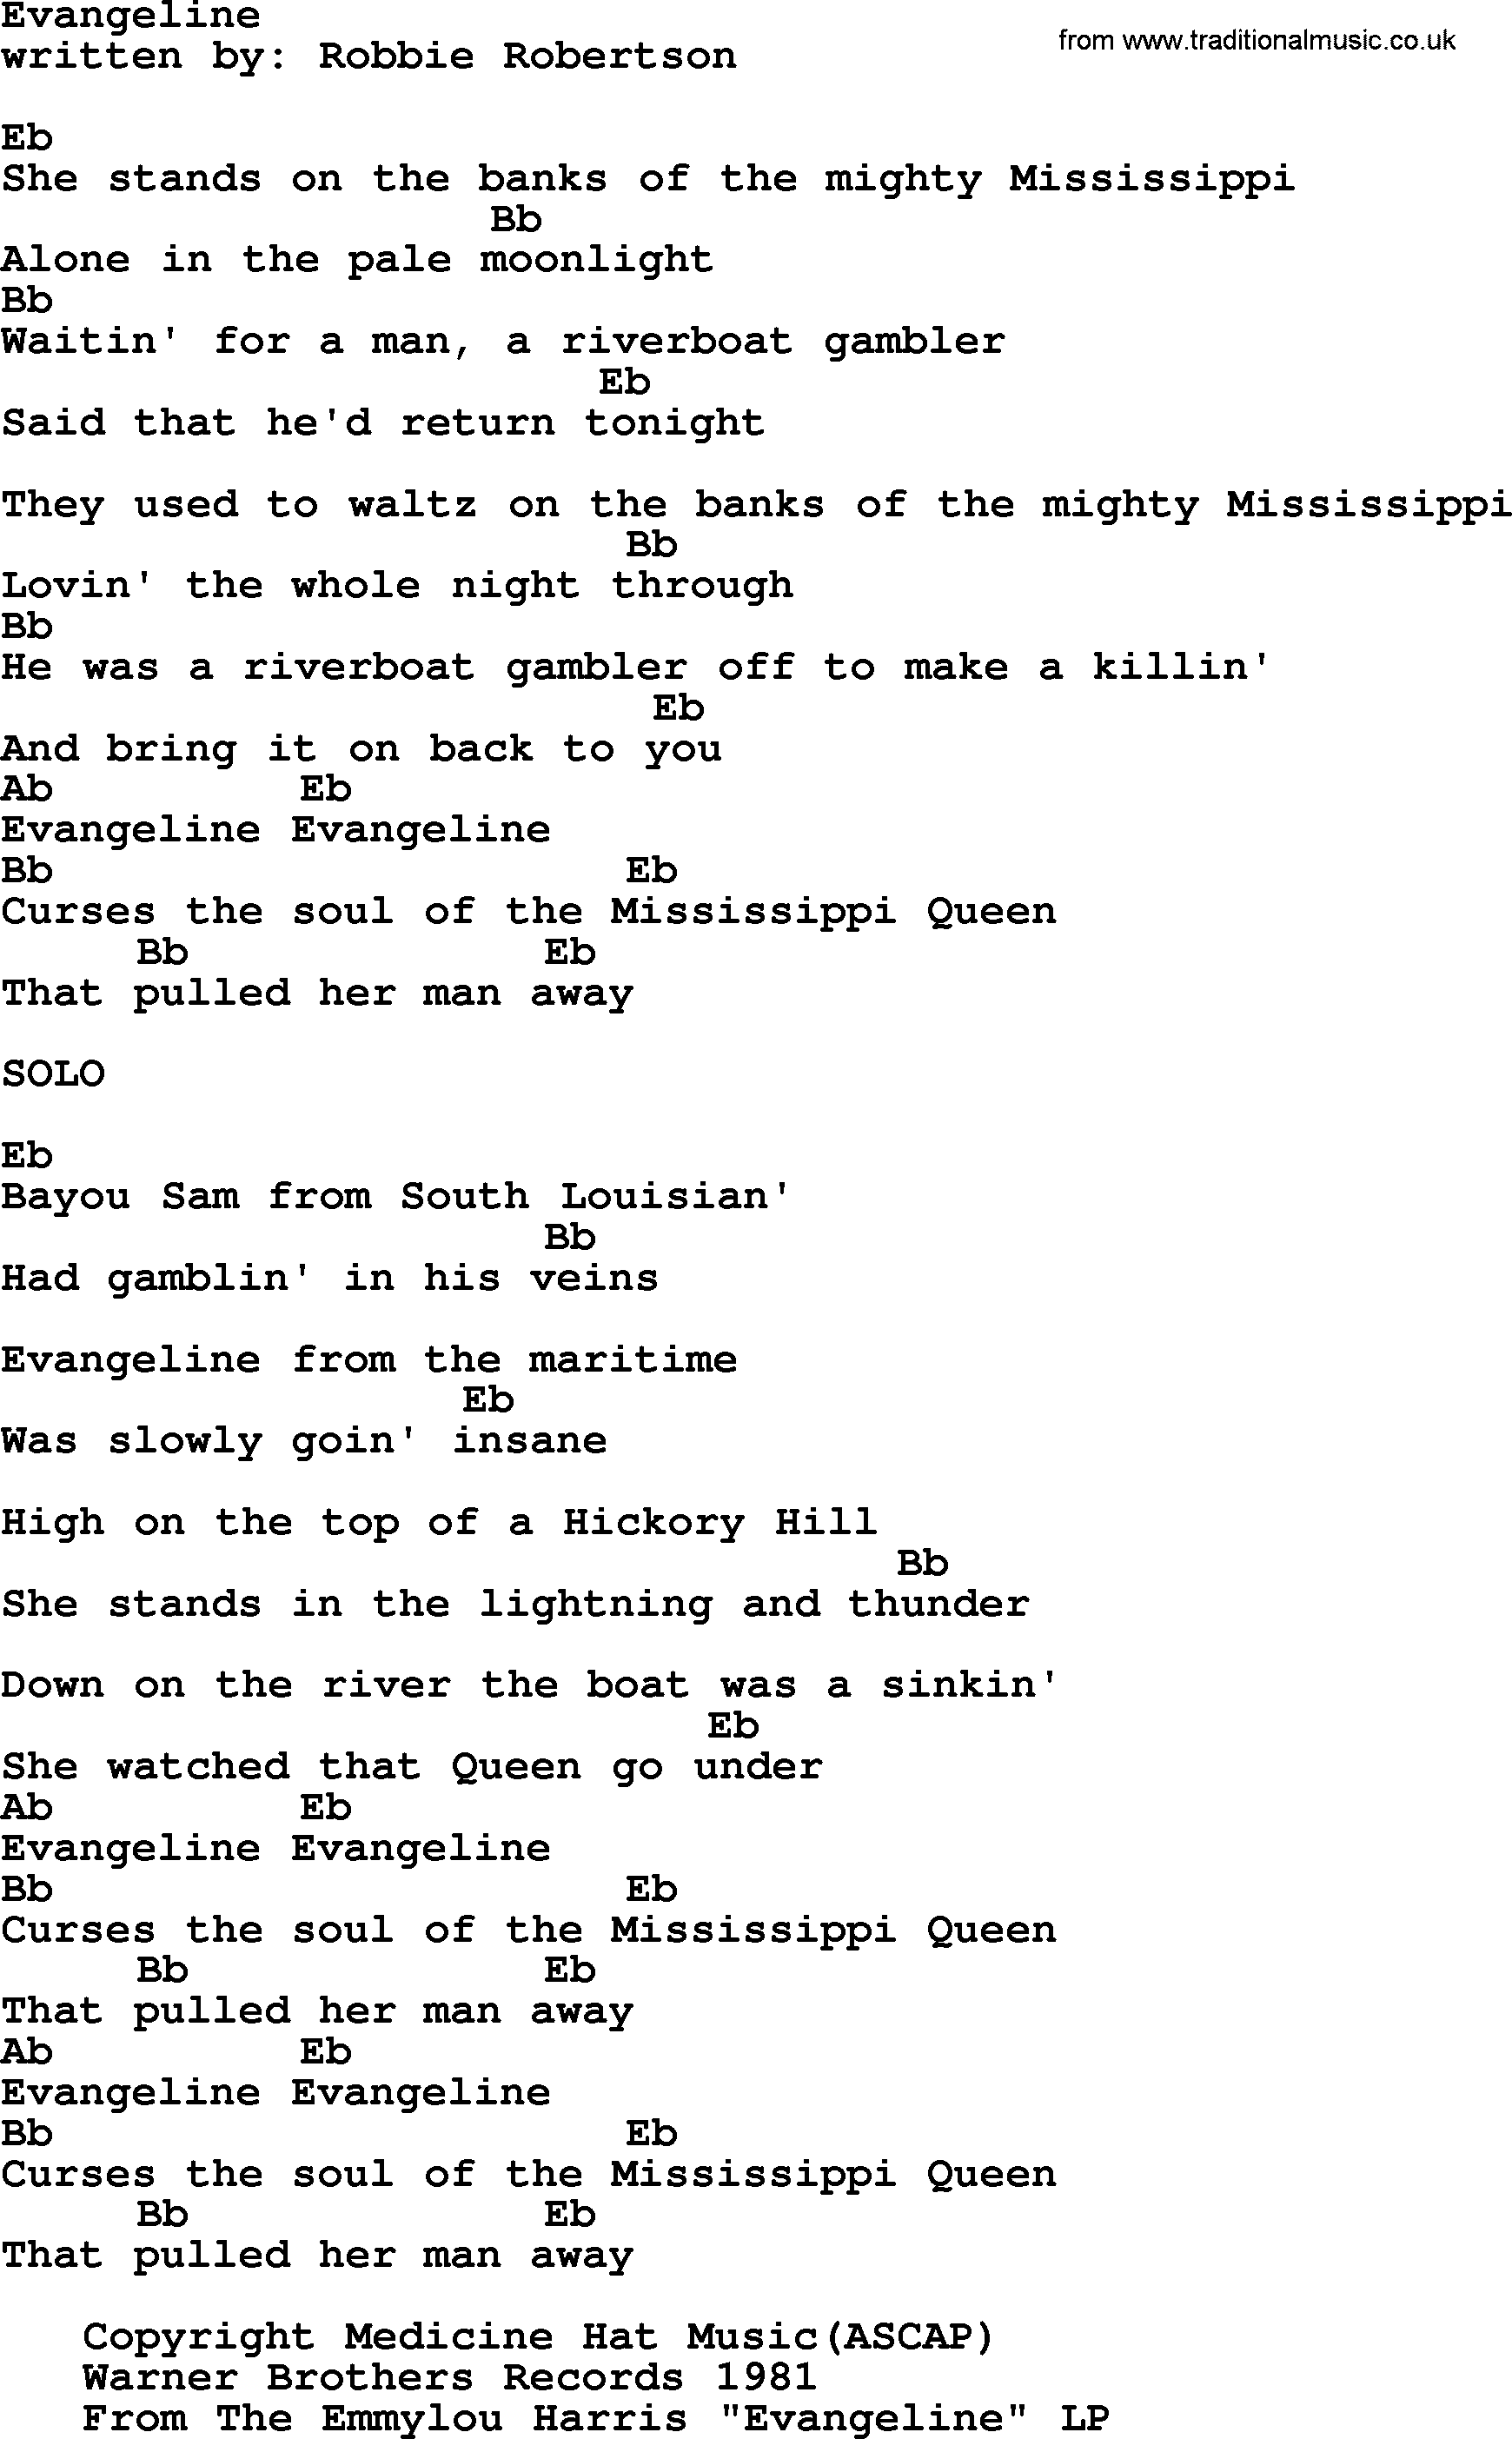 Emmylou Harris song: Evangeline lyrics and chords